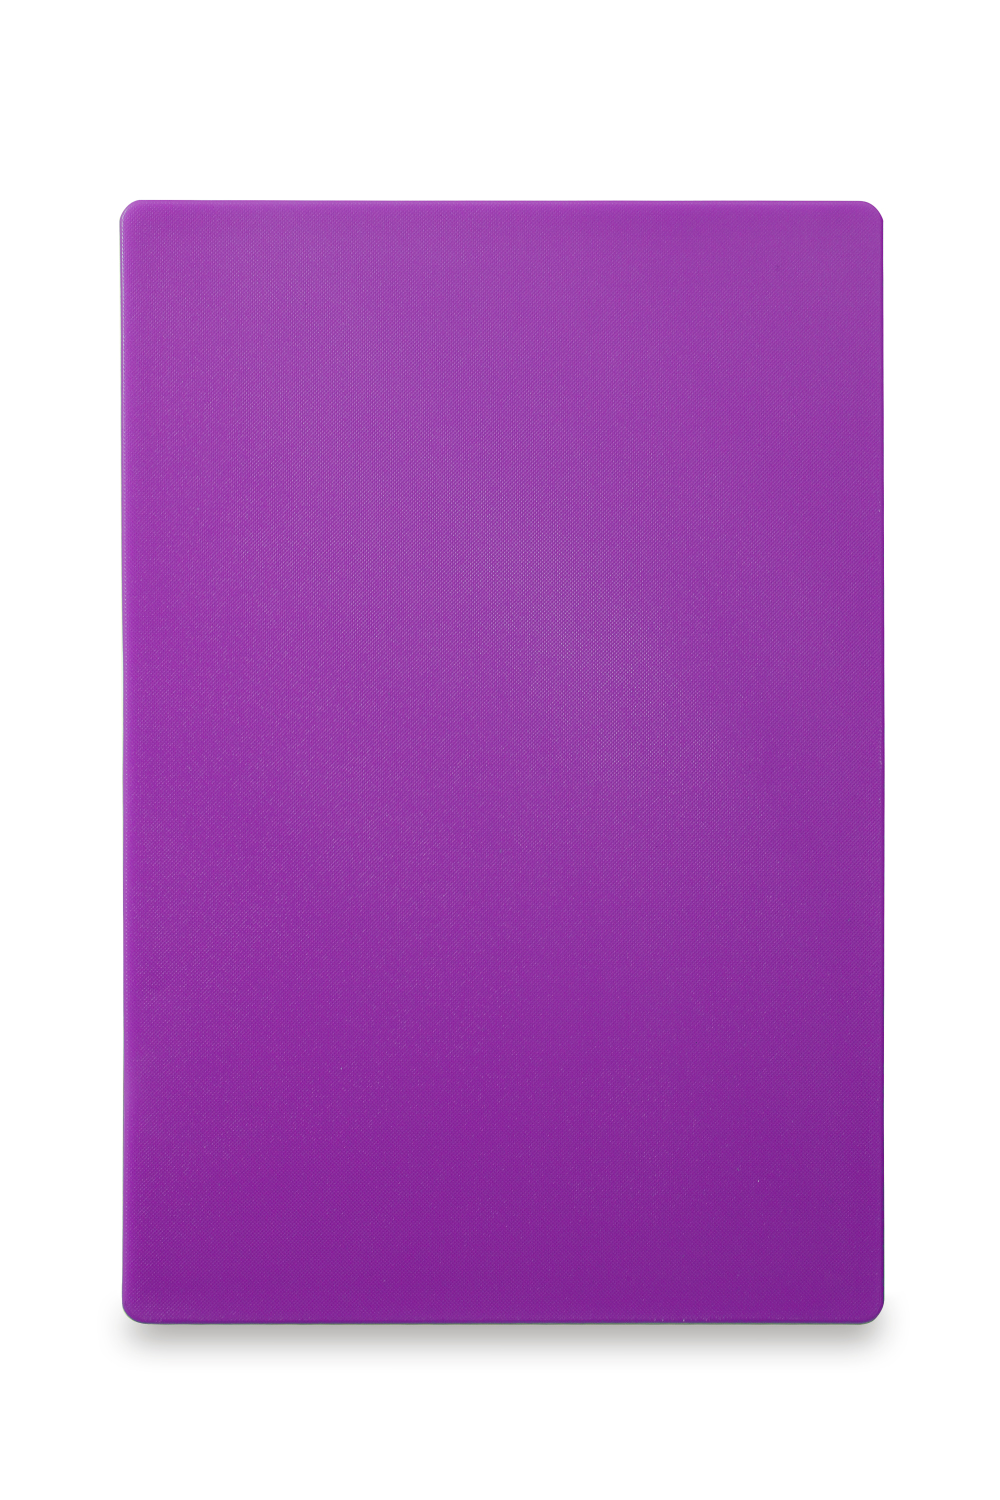 HACCP Schneidbrett 600x400 Violett